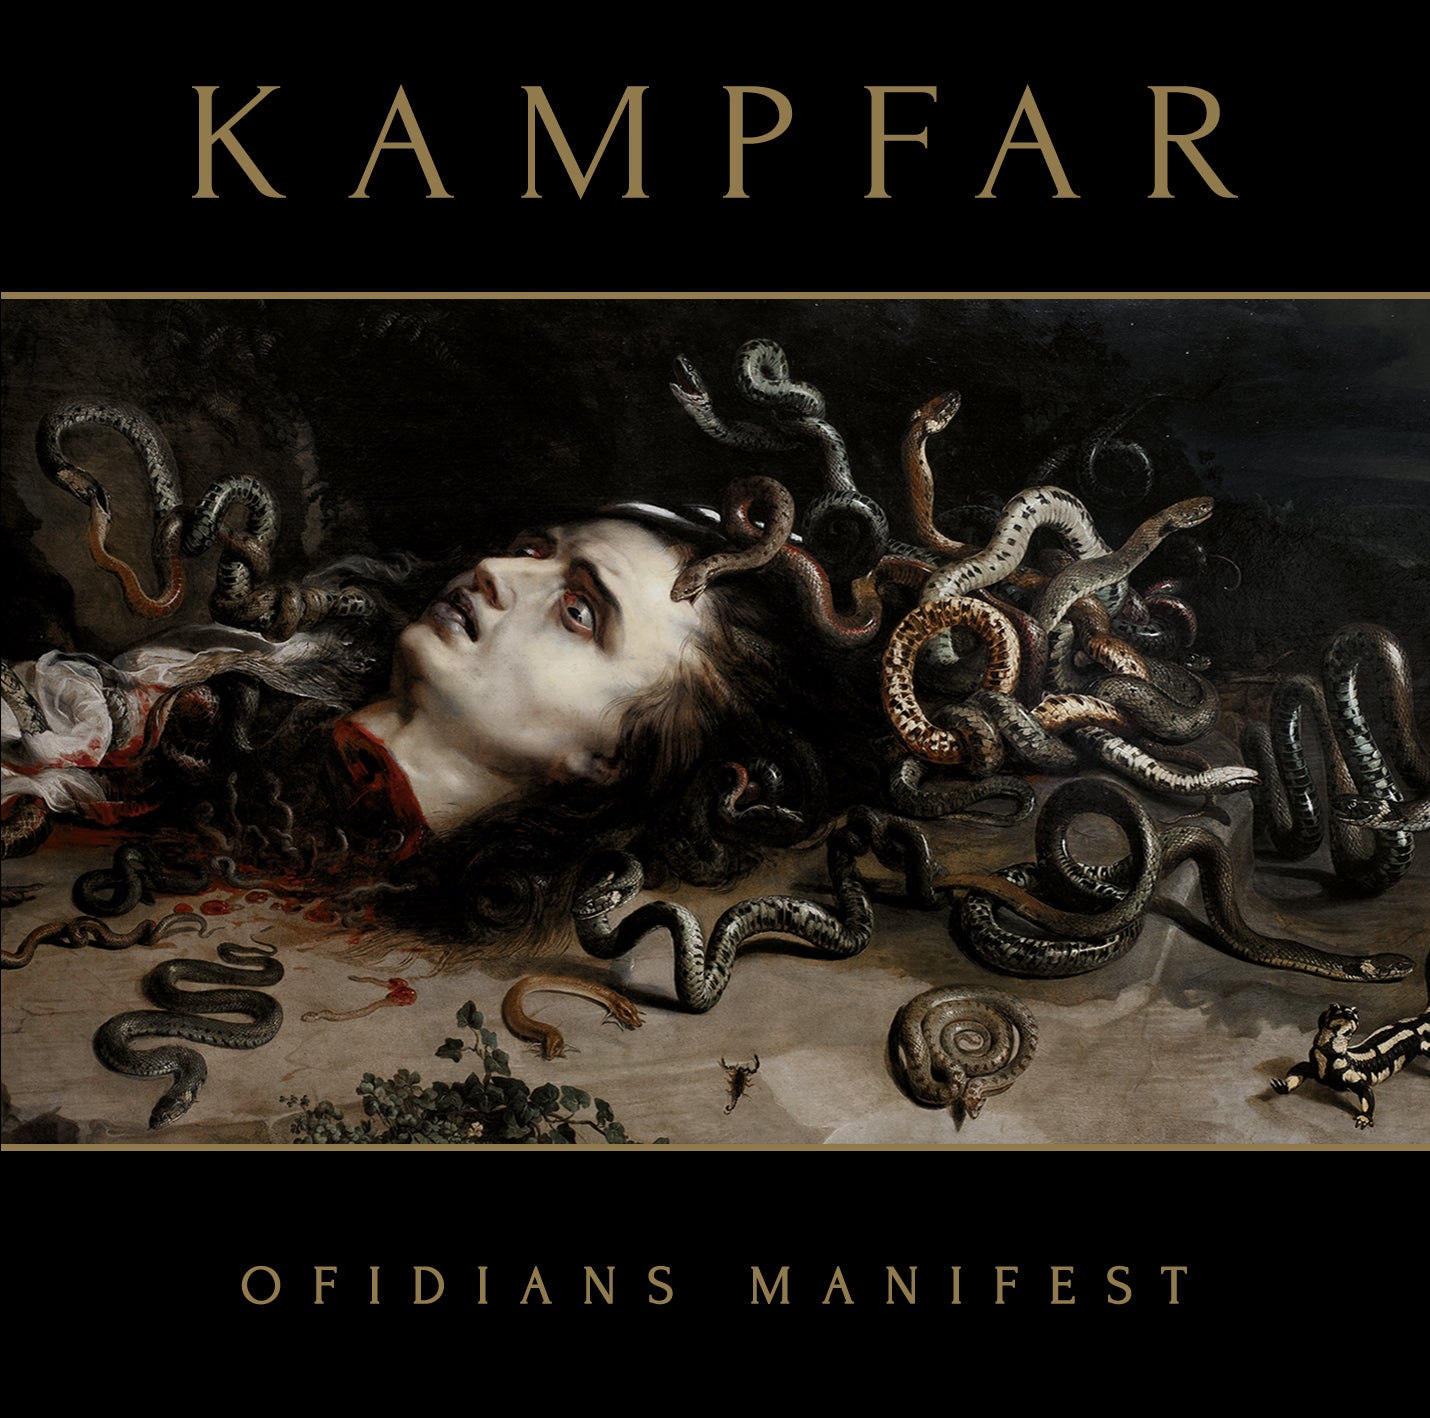 KAMPFAR - Ofidians Manifest (Tape - Limited Edition)